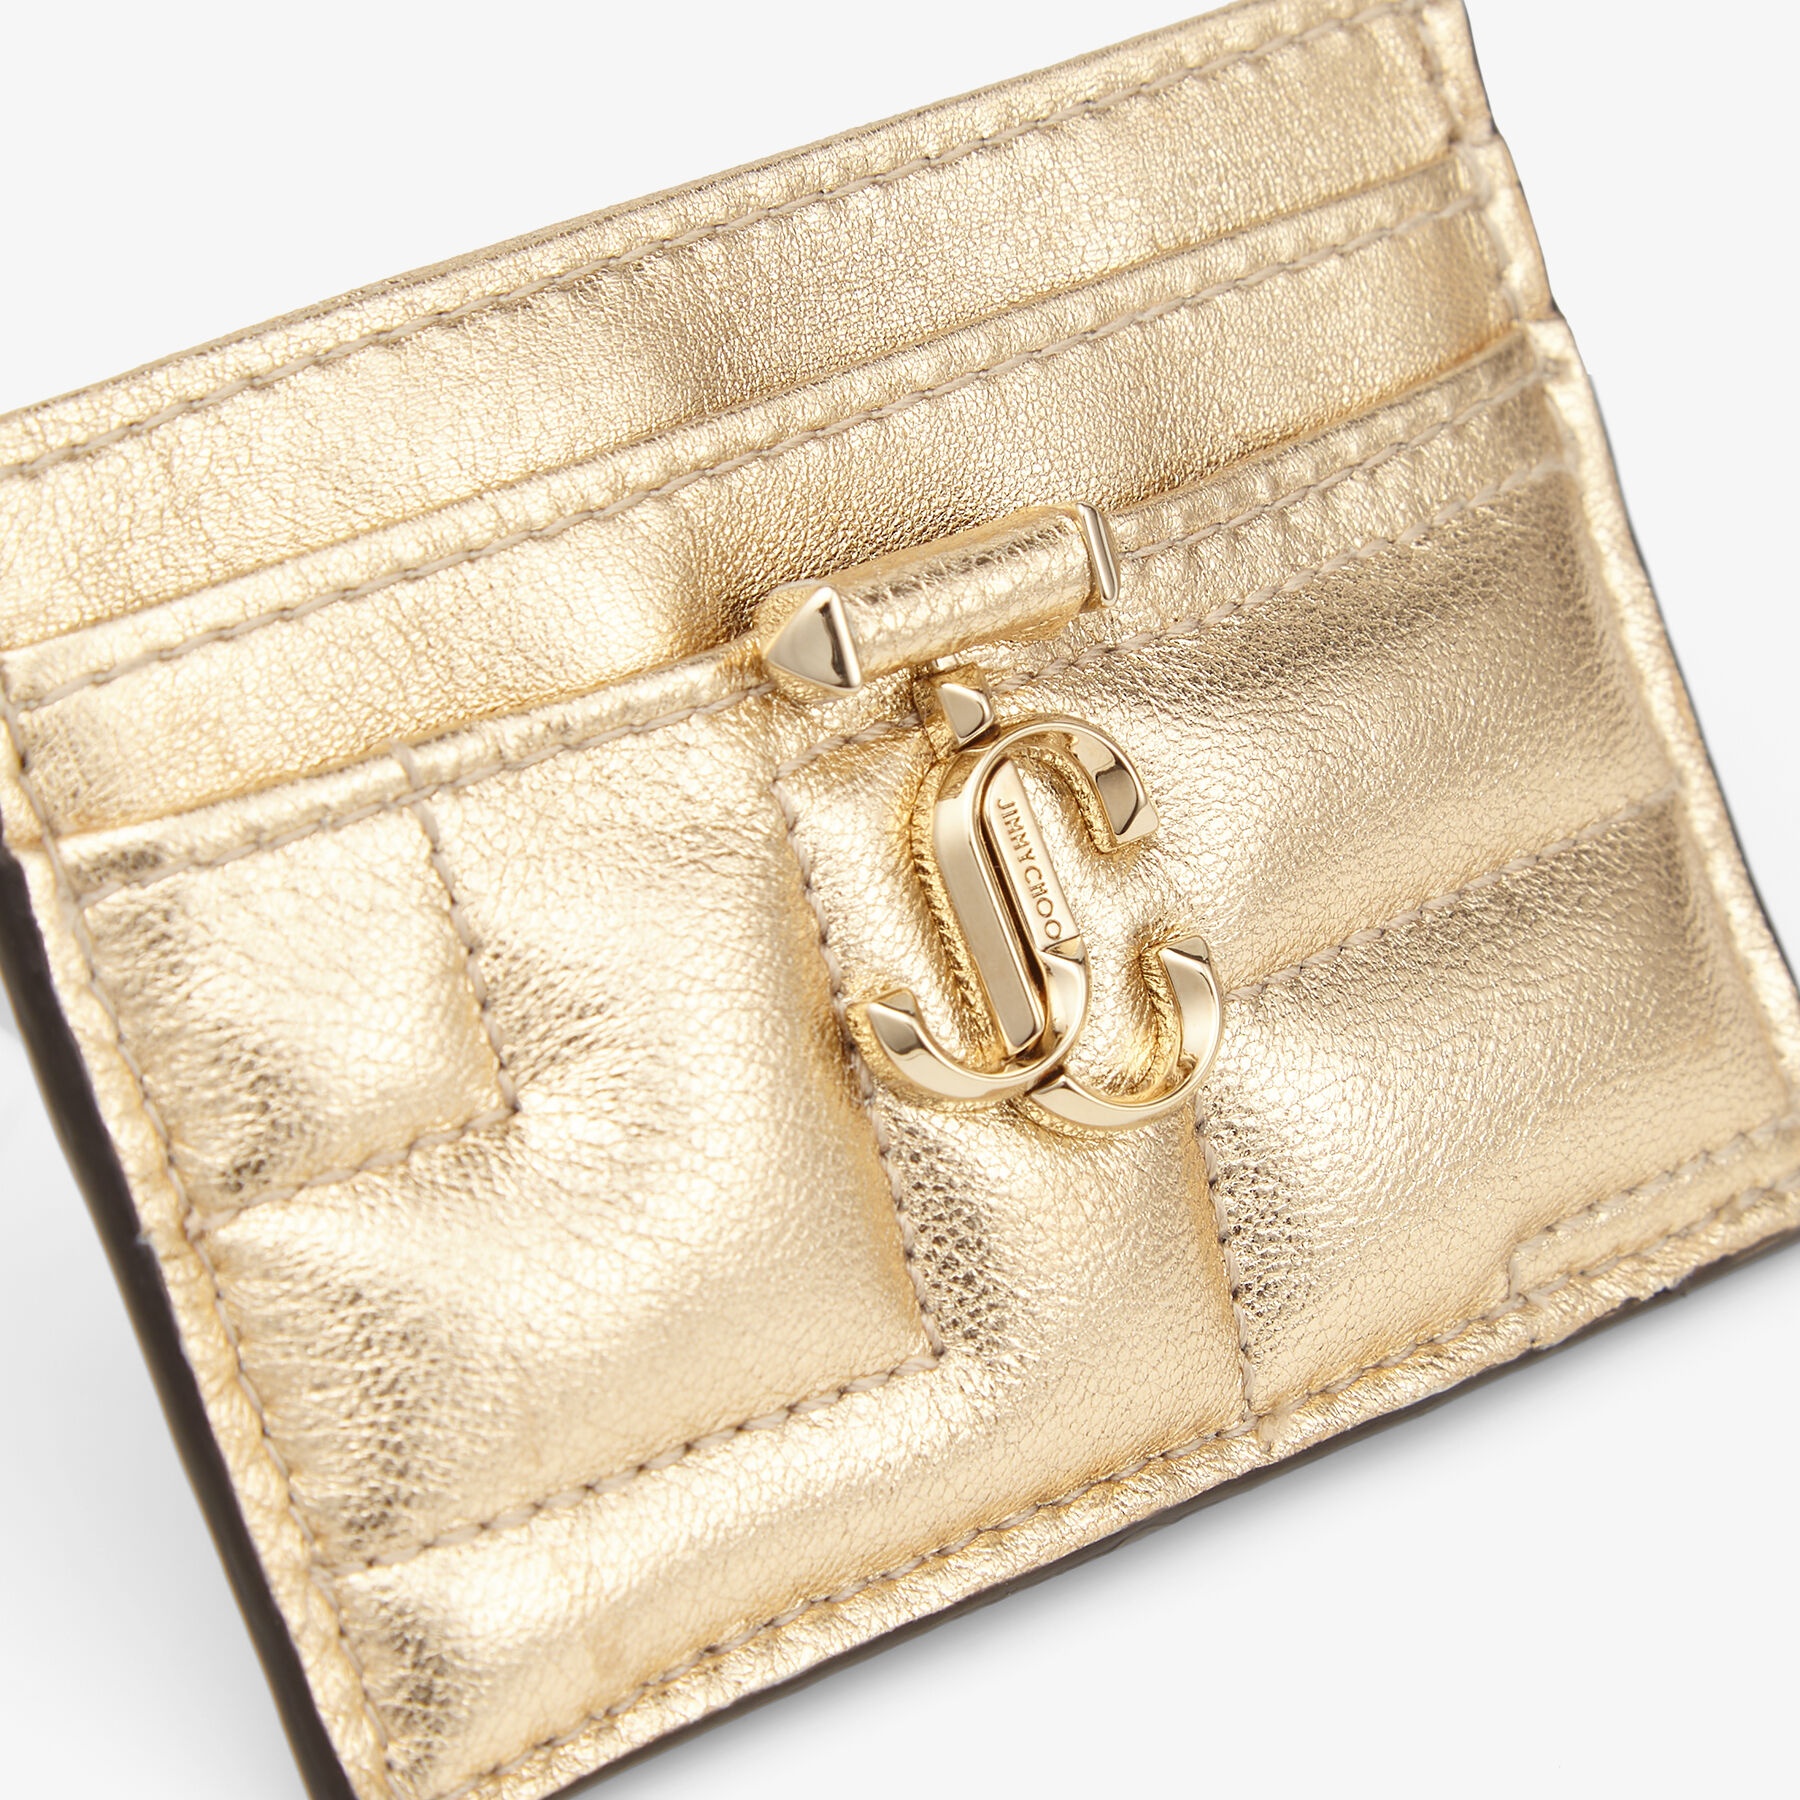 Umika Avenue
Gold Avenue Metallic Nappa Leather Card Holder with JC Emblem - 4